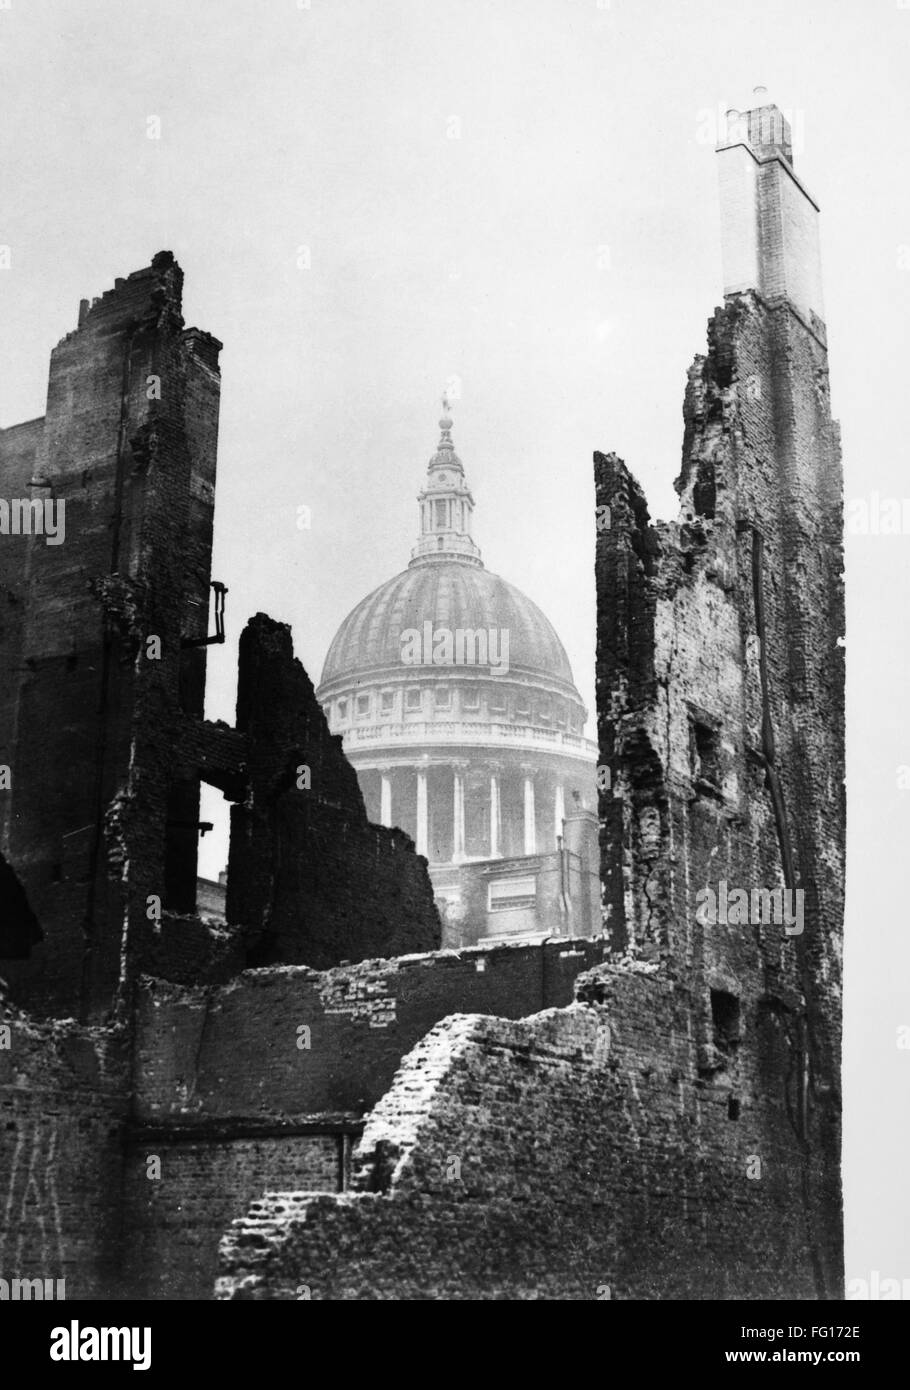 WORLD WAR II: LONDON BLITZ. /nSaint Paul's Cathedral behind ruined buildings following a German air raid during World War II. Photograph, 1941. Stock Photo